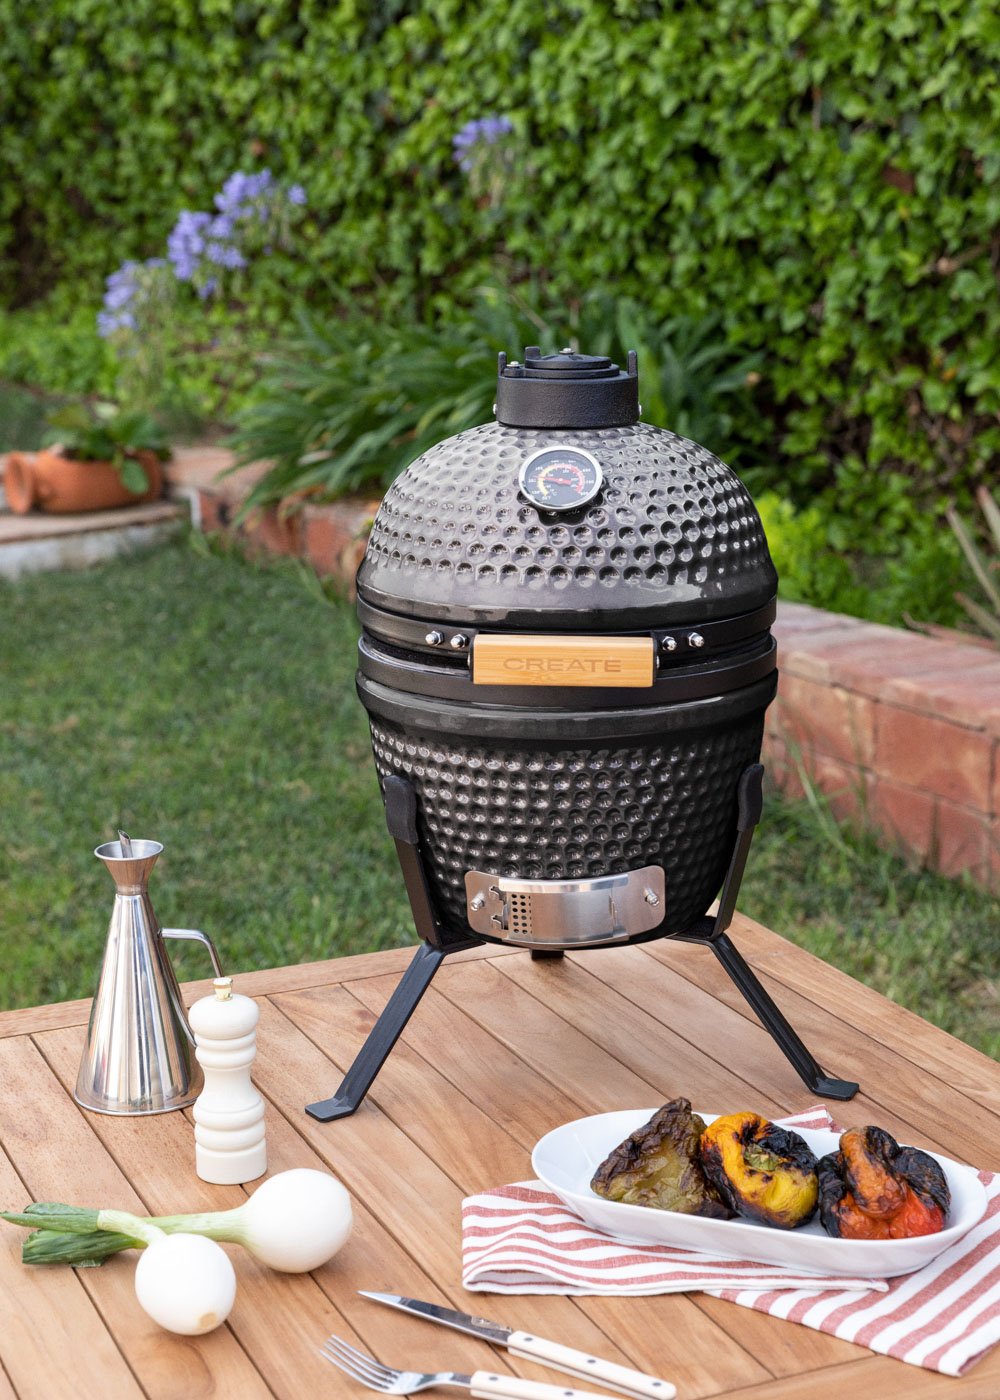 BBQ KAMADO - Ceramic smoker barbecue grill